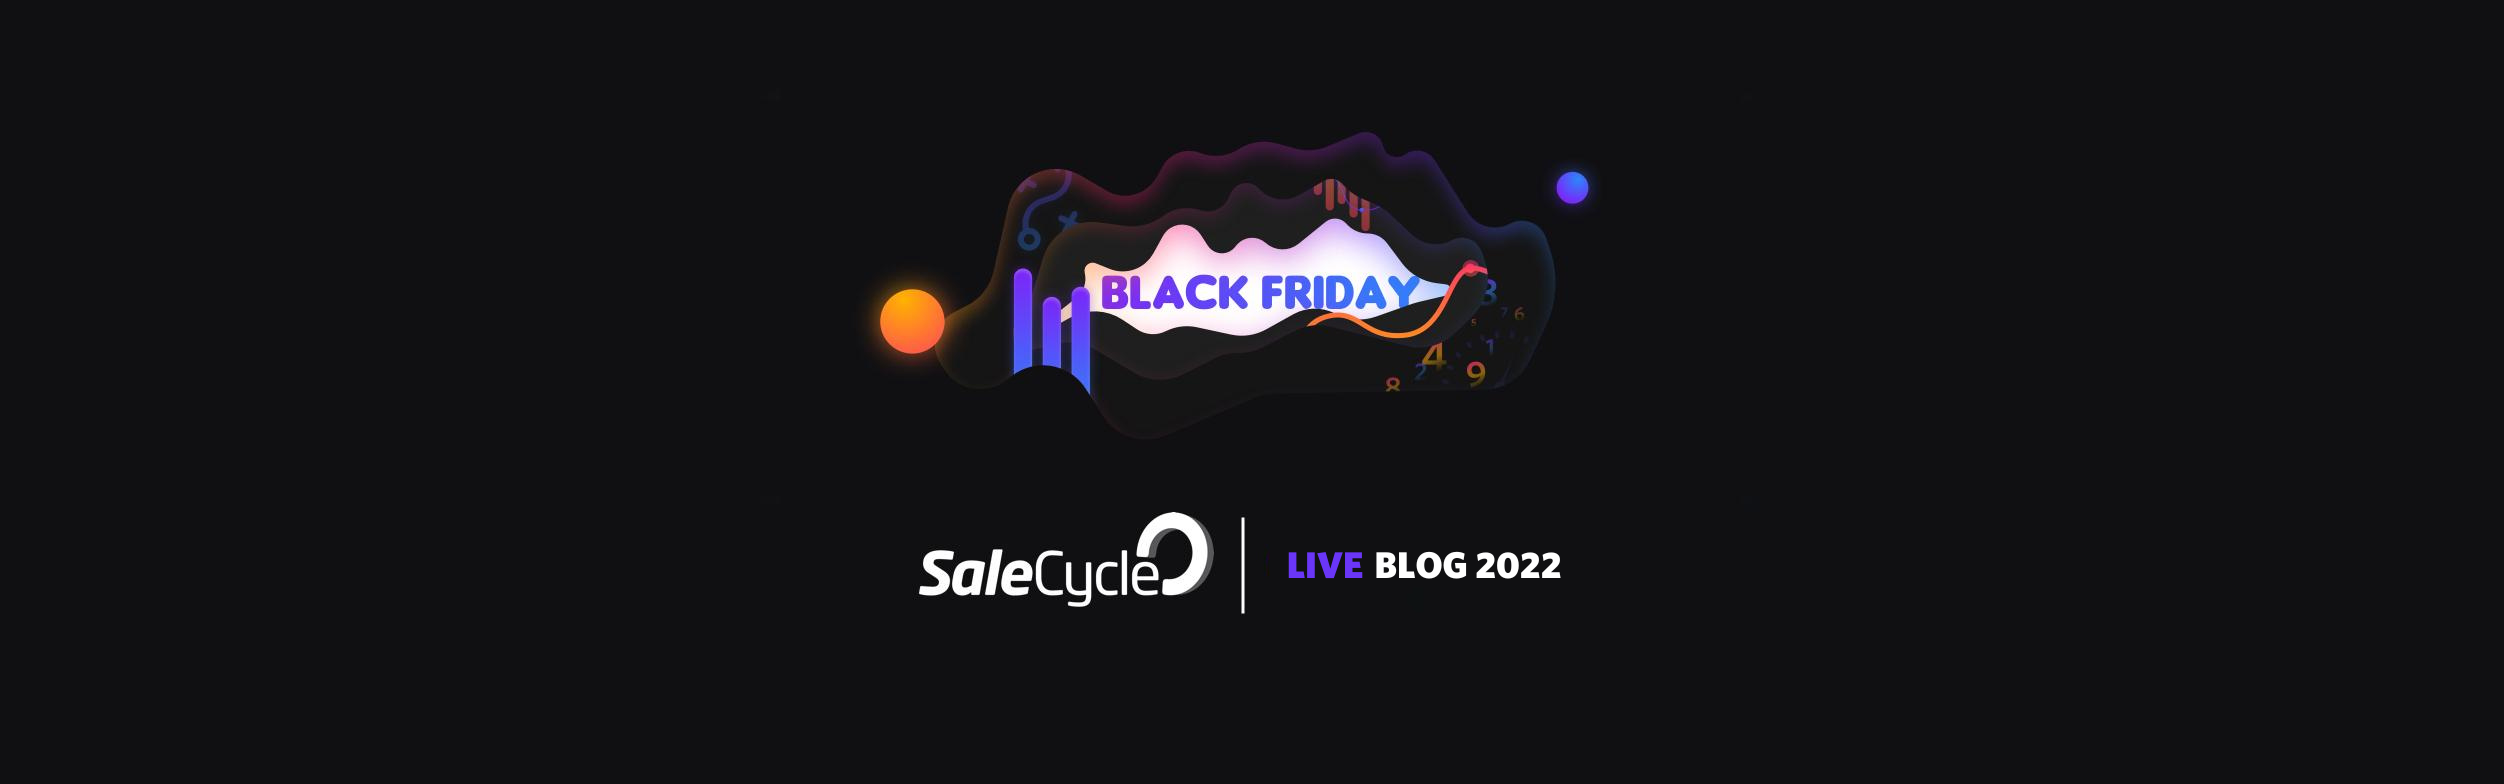 Live Blog sul Black Friday 2022